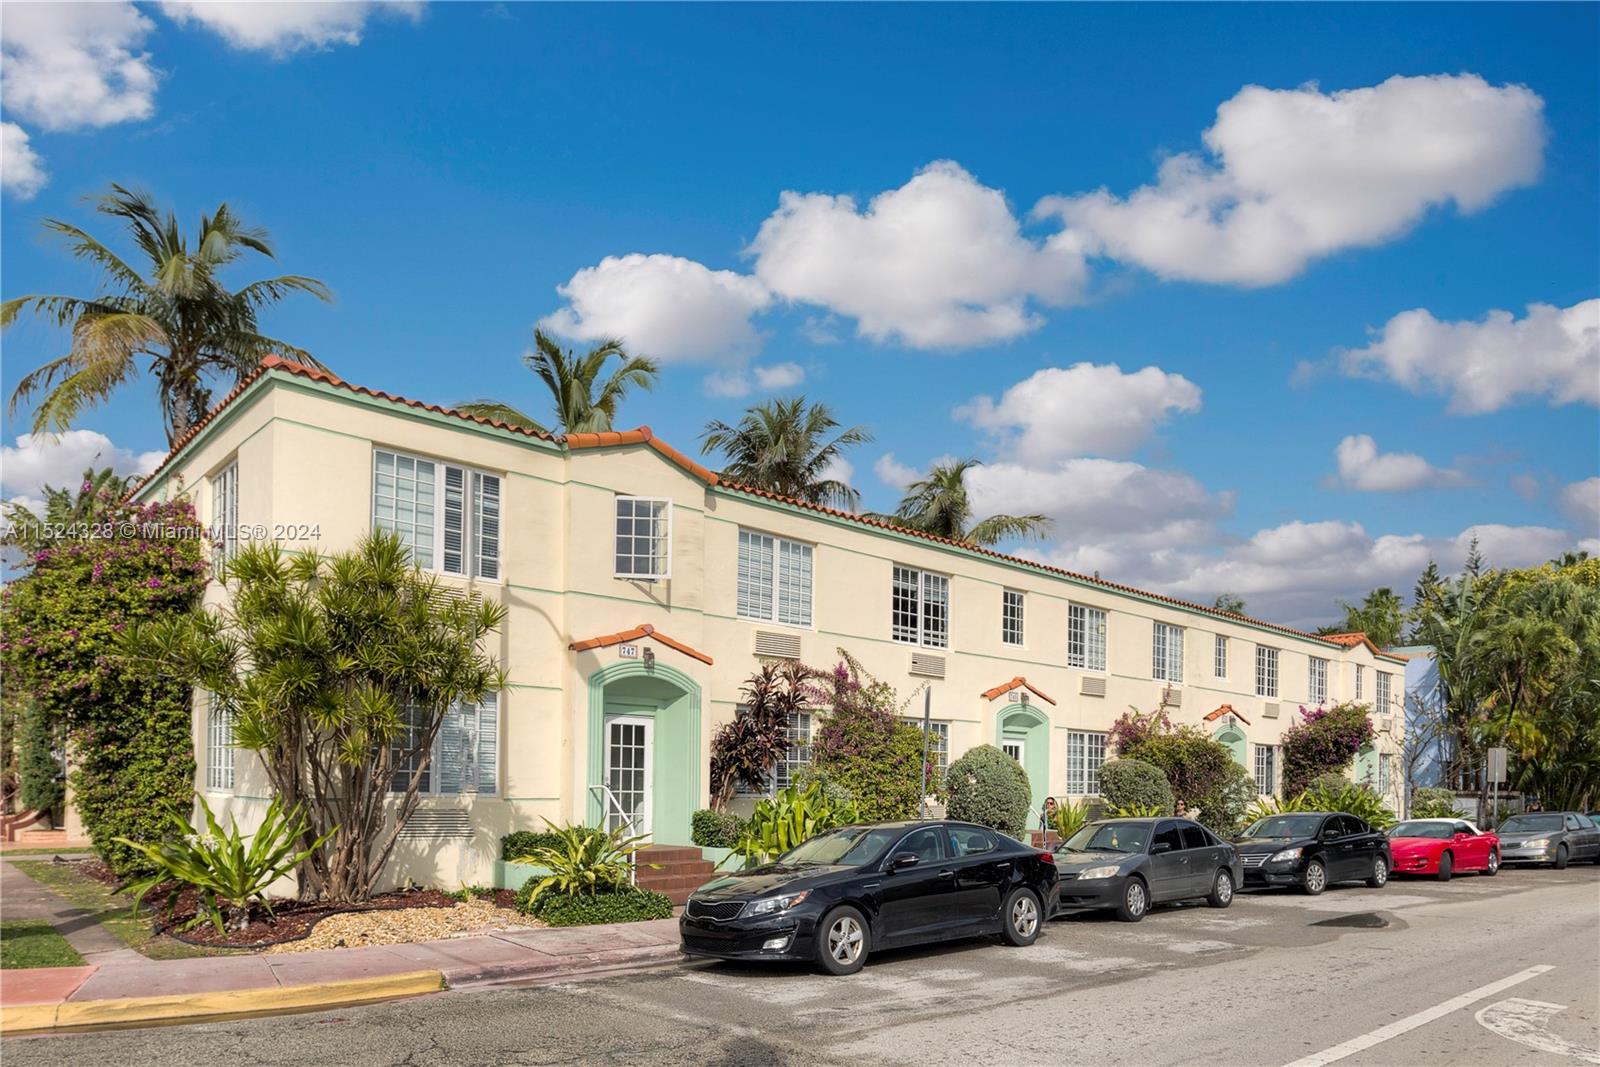 Property for Sale at 747 15 3, Miami Beach, Miami-Dade County, Florida - Bedrooms: 1 
Bathrooms: 1  - $225,000